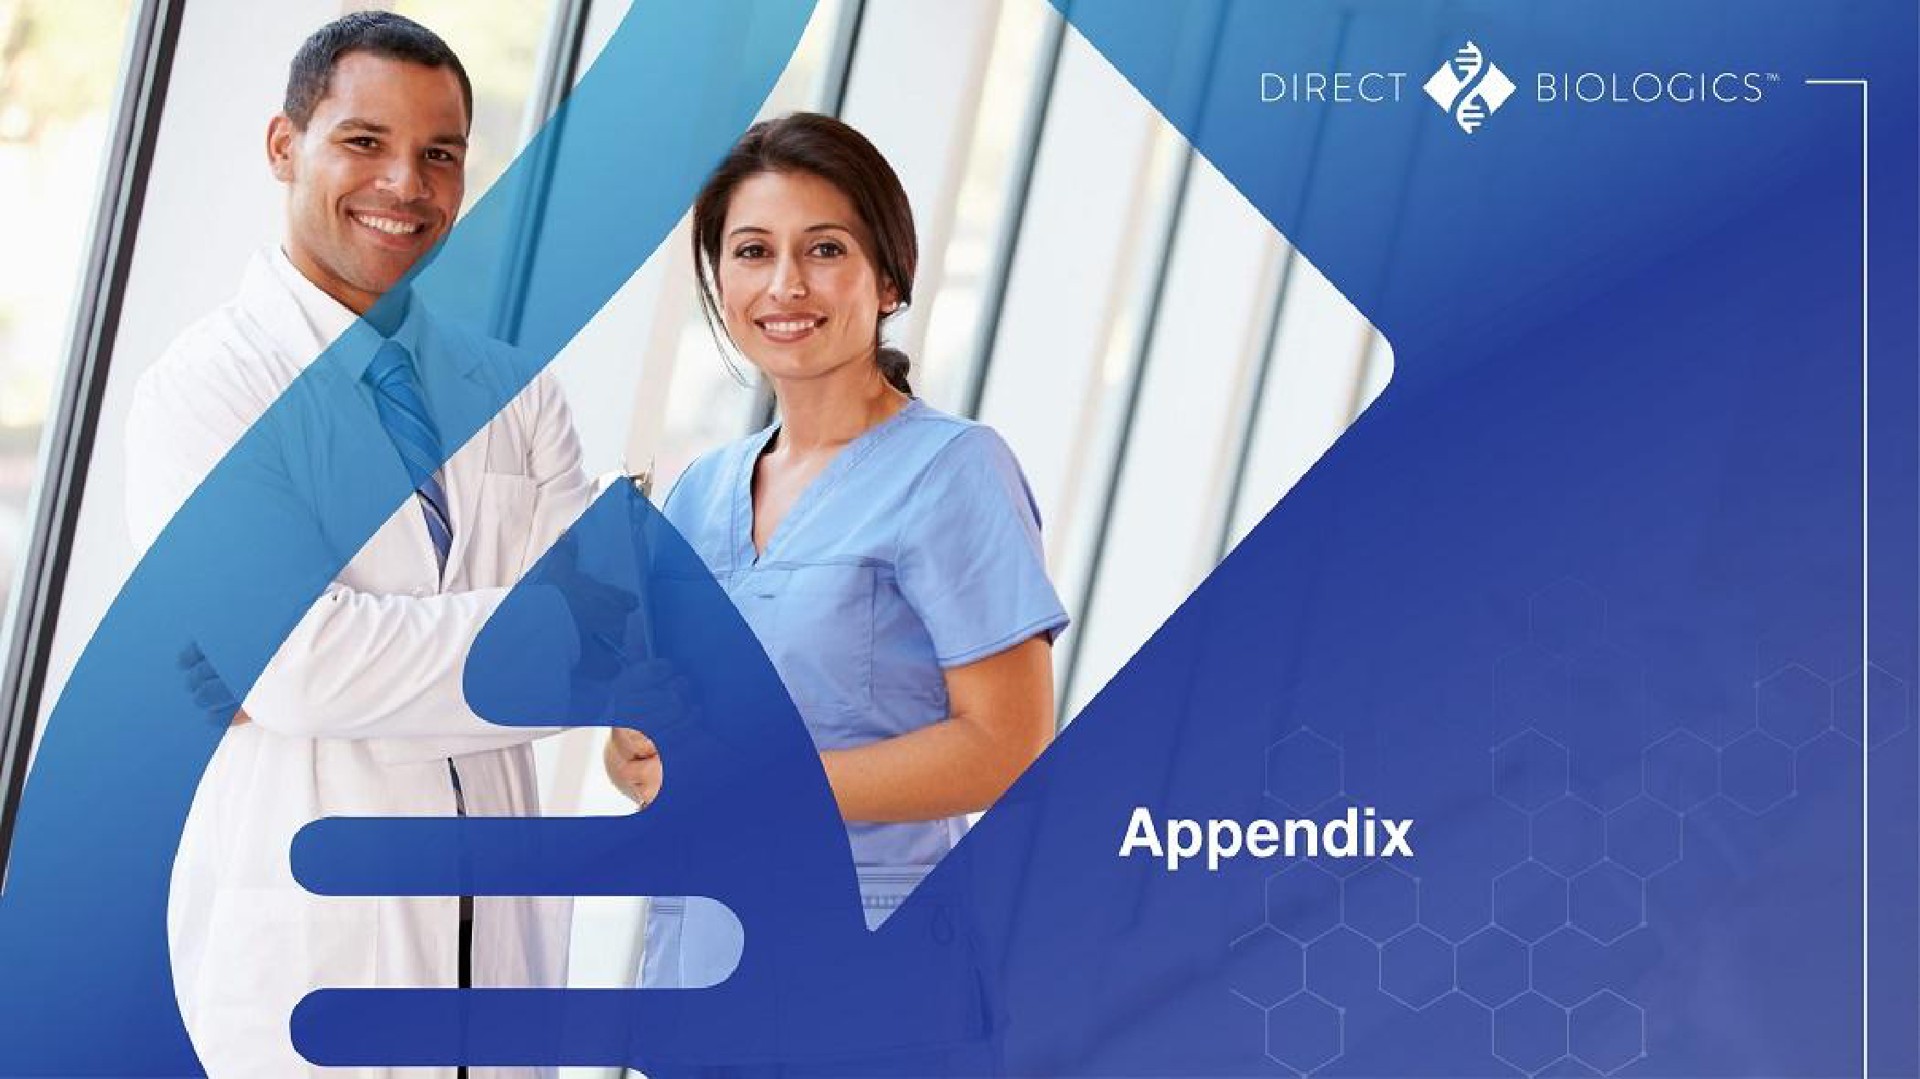 direct appendix | Direct Biologics